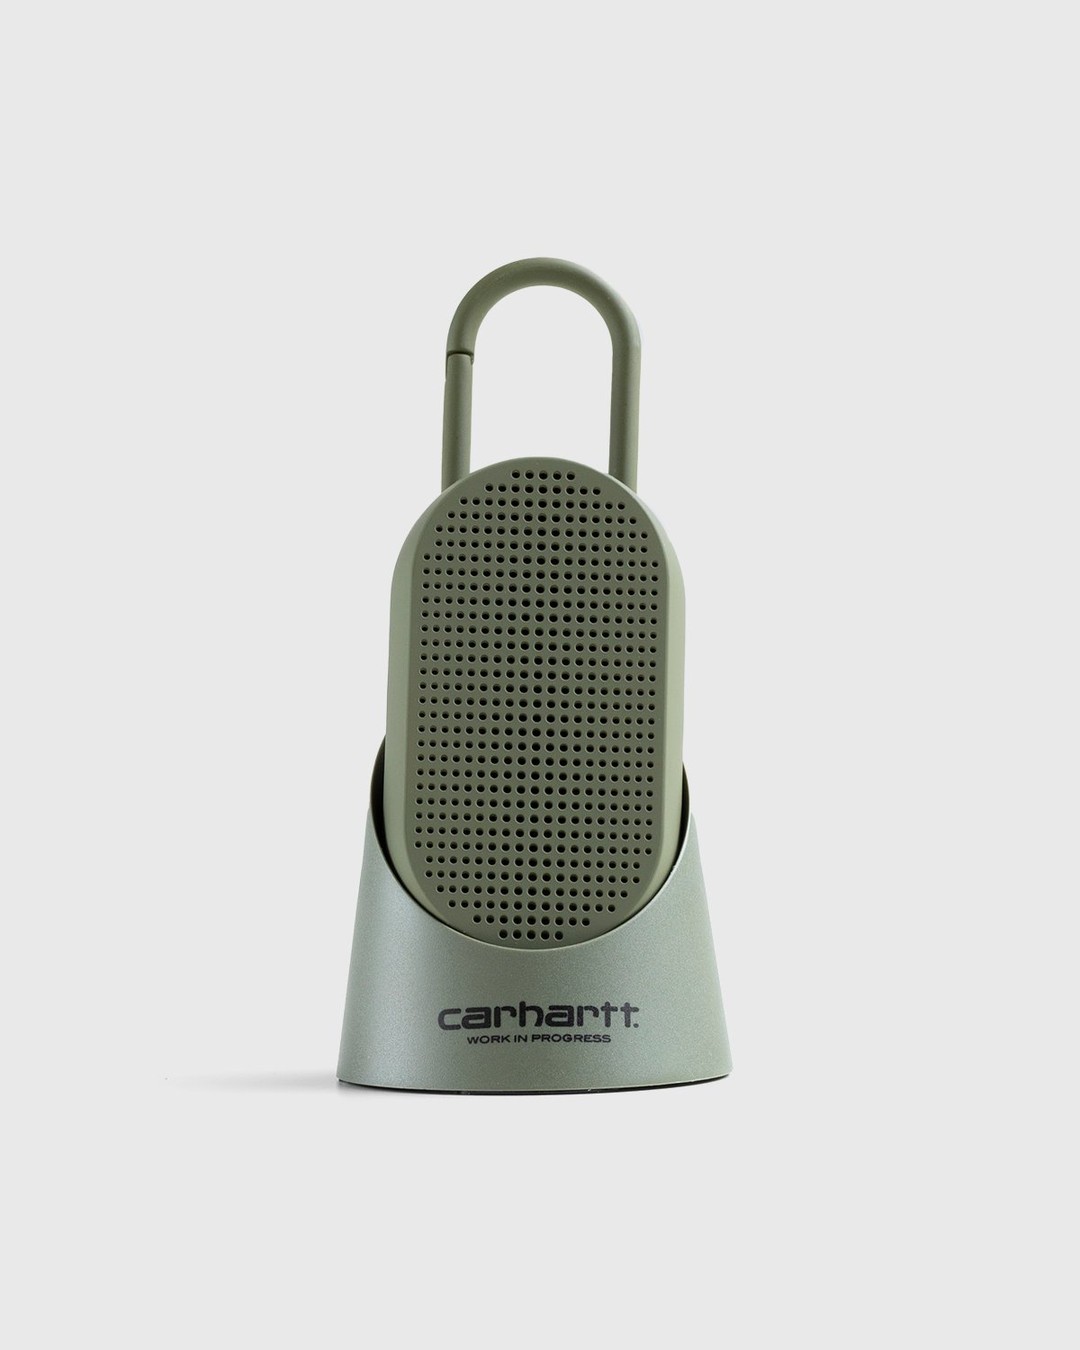 Carhartt WIP – Lexon Mino T Speaker Cypress - Lifestyle - Green - Image 1